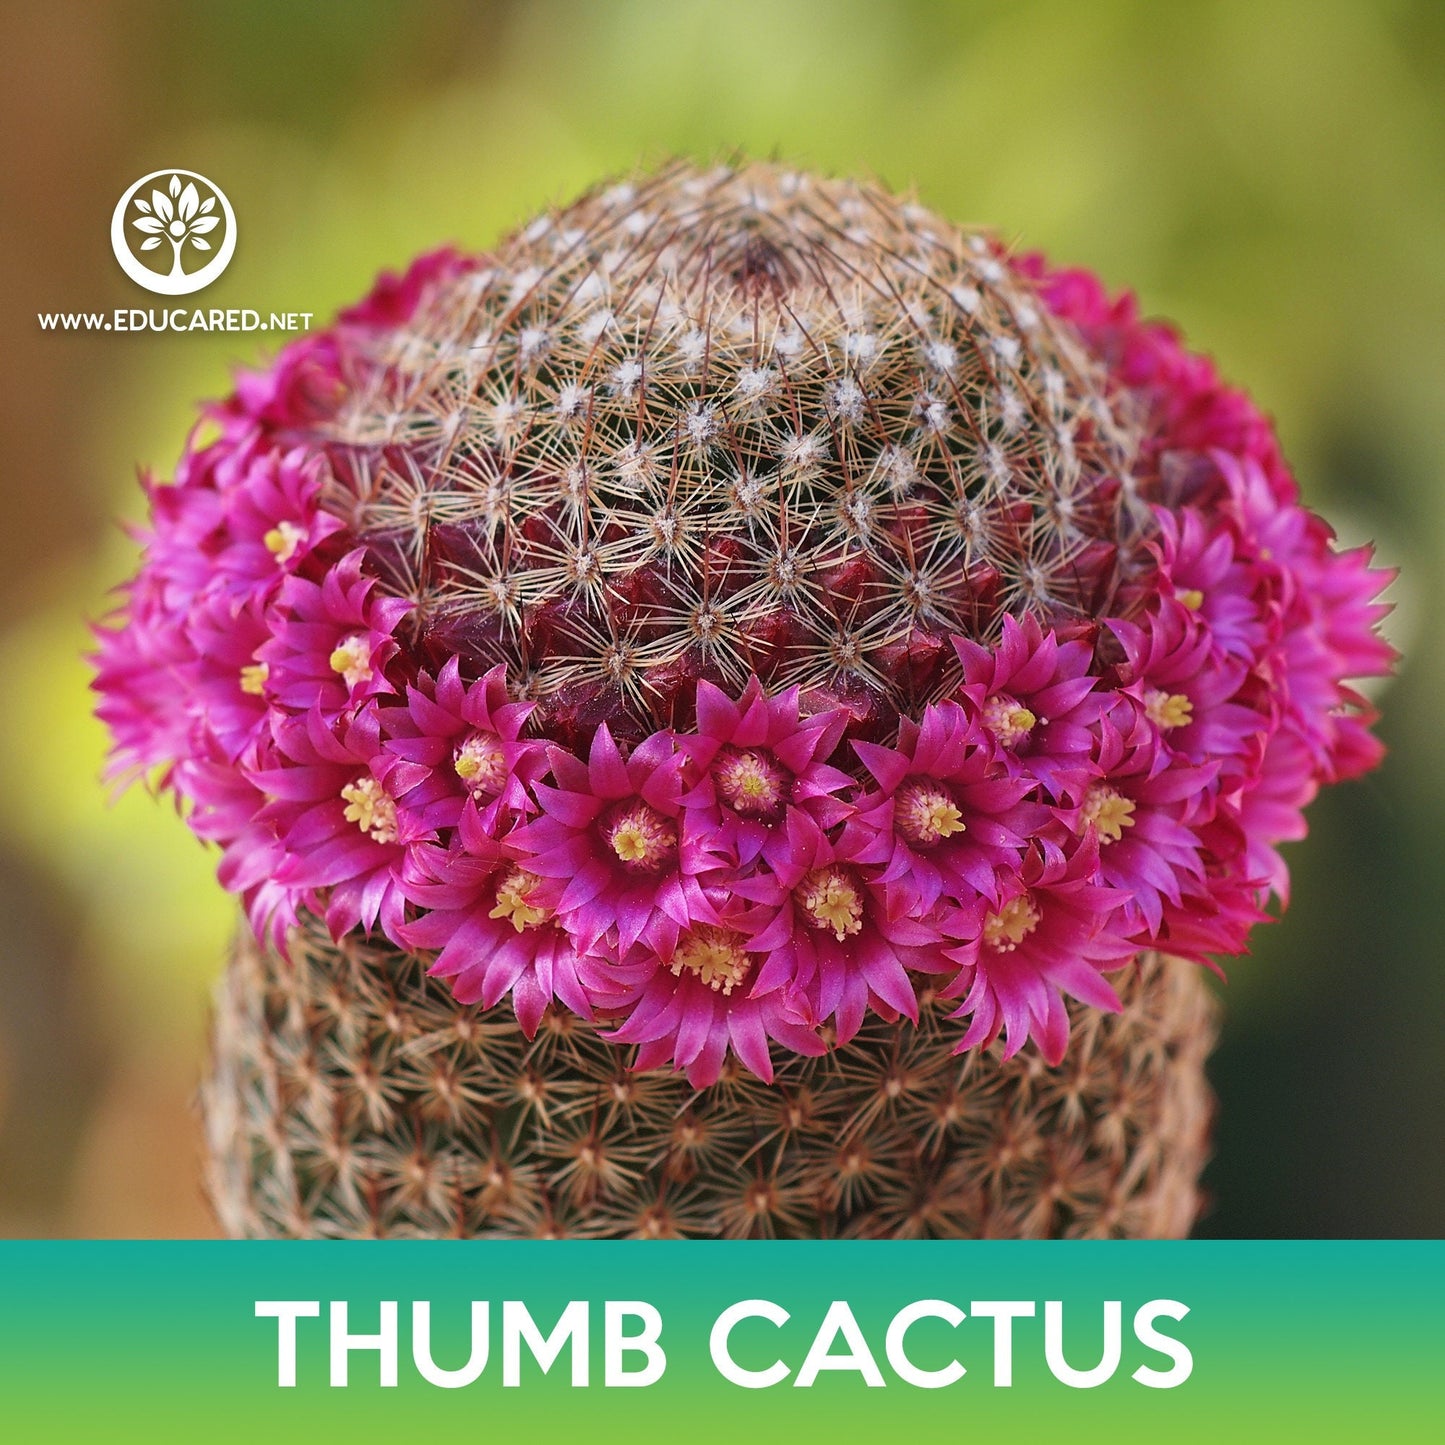 Thumb Cactus Seeds, Mammillaria matudae